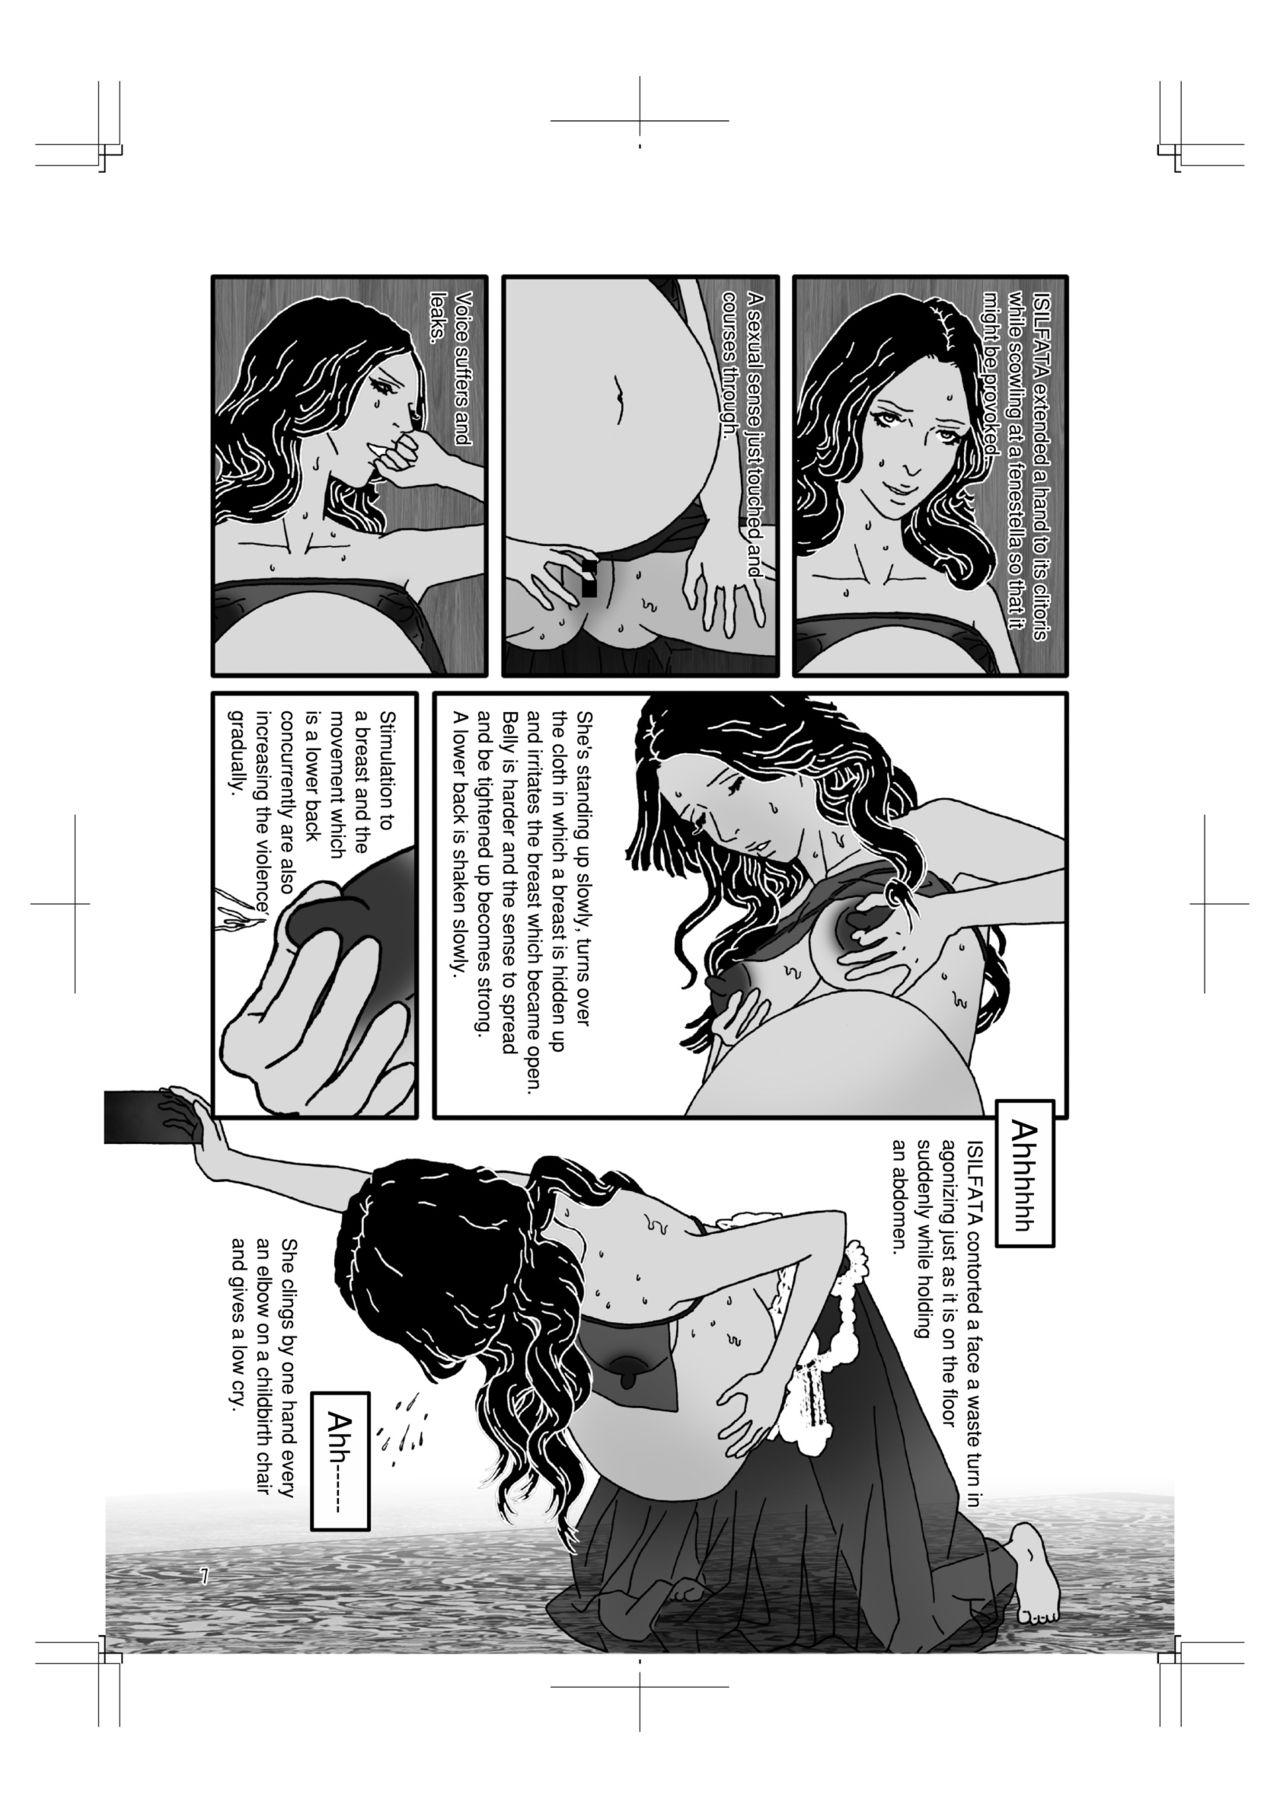 Twinkstudios HARAMI-KIBYOSHI Ep5 Ep6 Highheels - Page 6